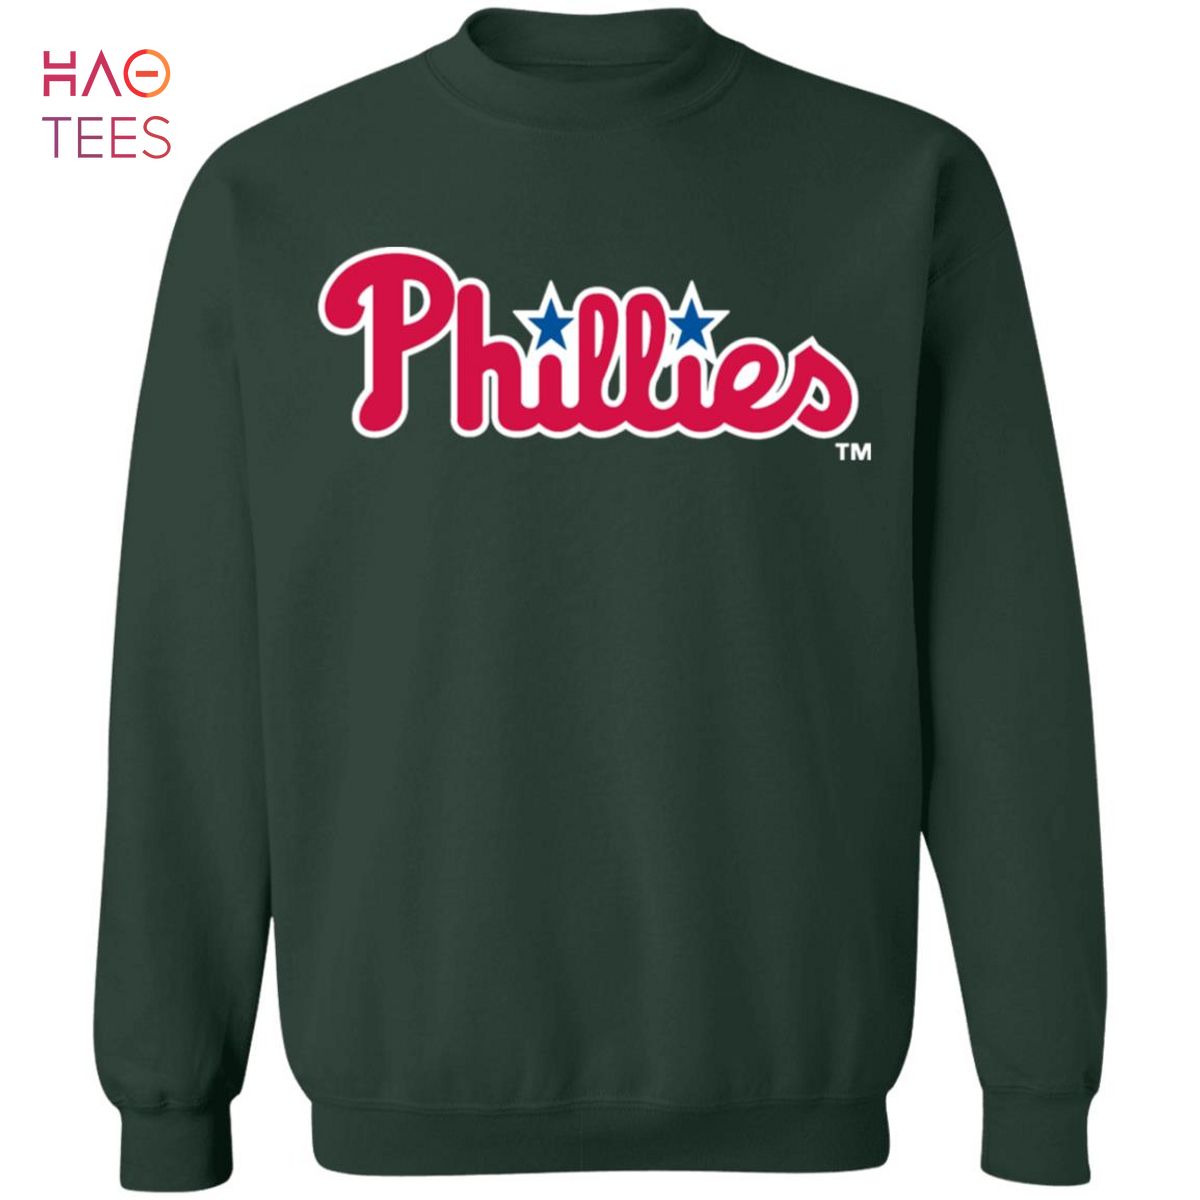 HOT Bryce Harper Phillies Sweater